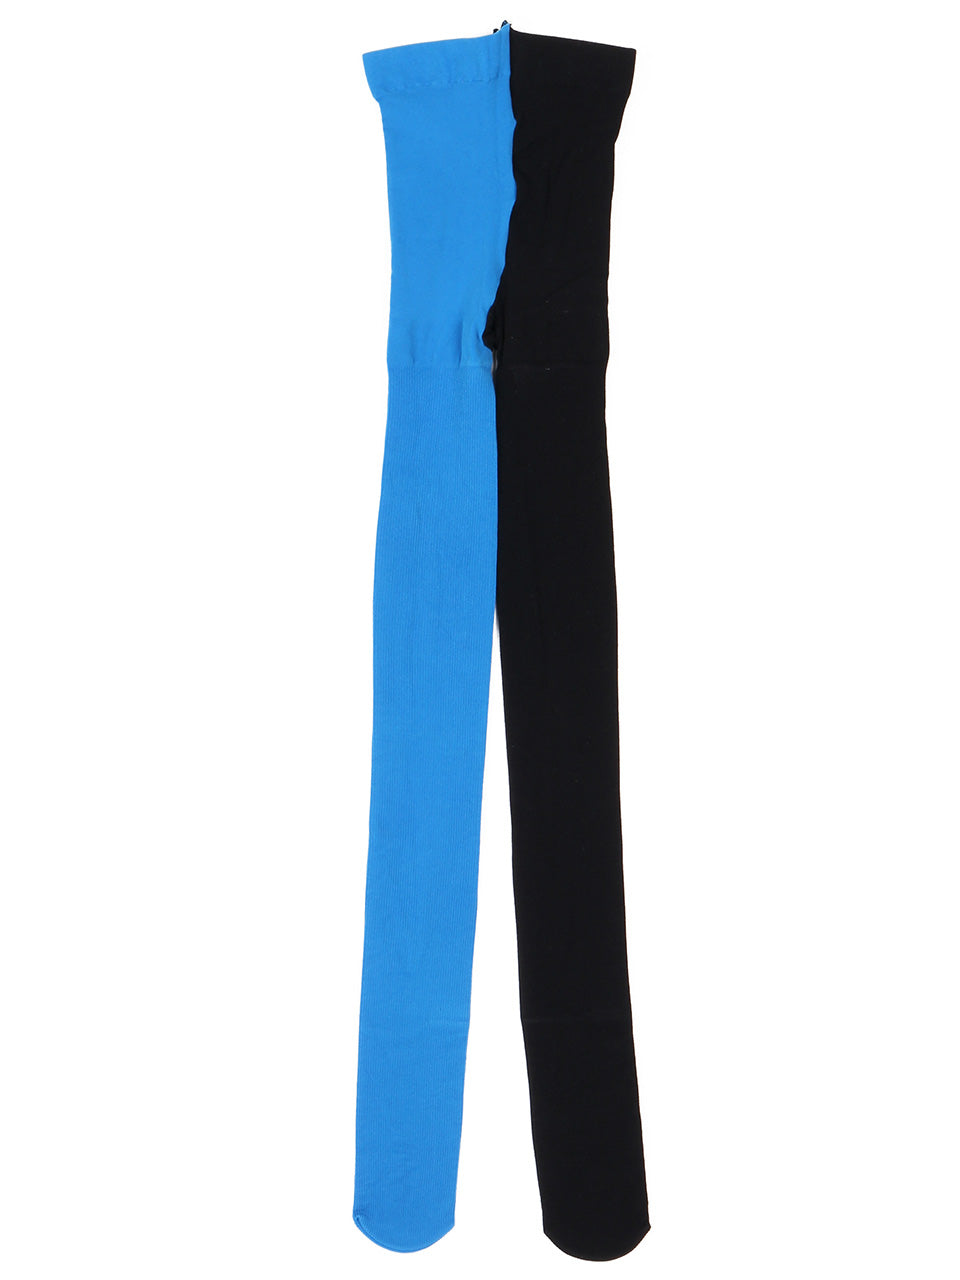 Slim Fit Ribbed Tights (blue/black)